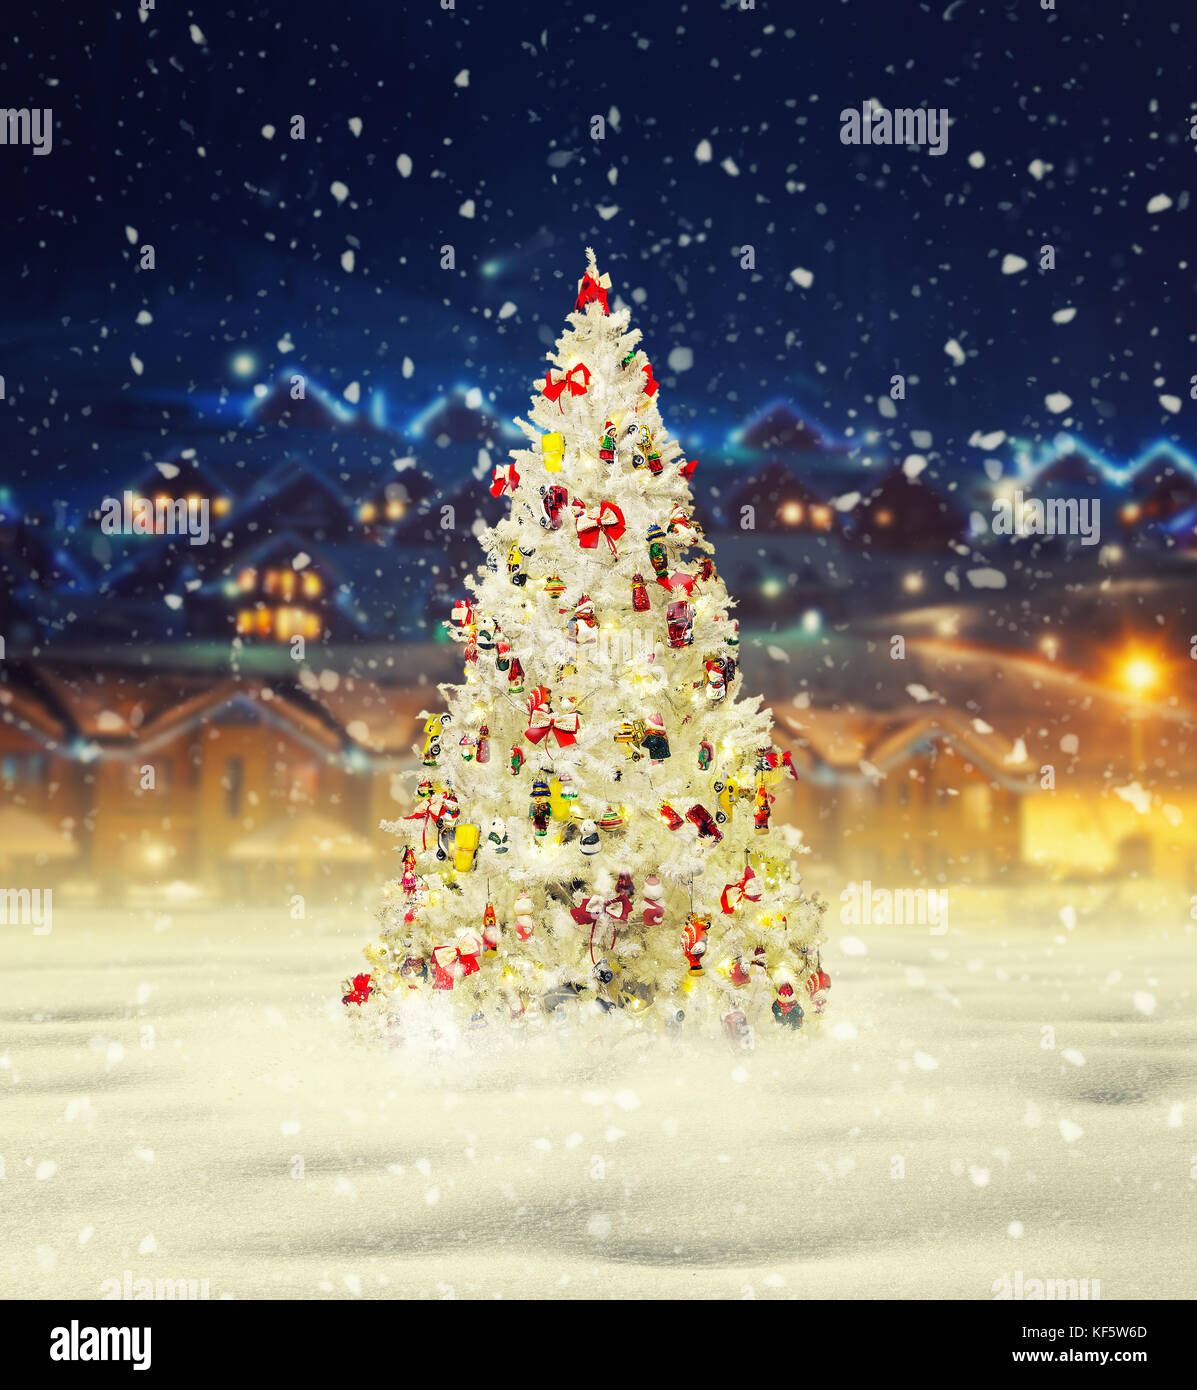 Merry christmas, snowy xmas tree with decoration Stock Photo